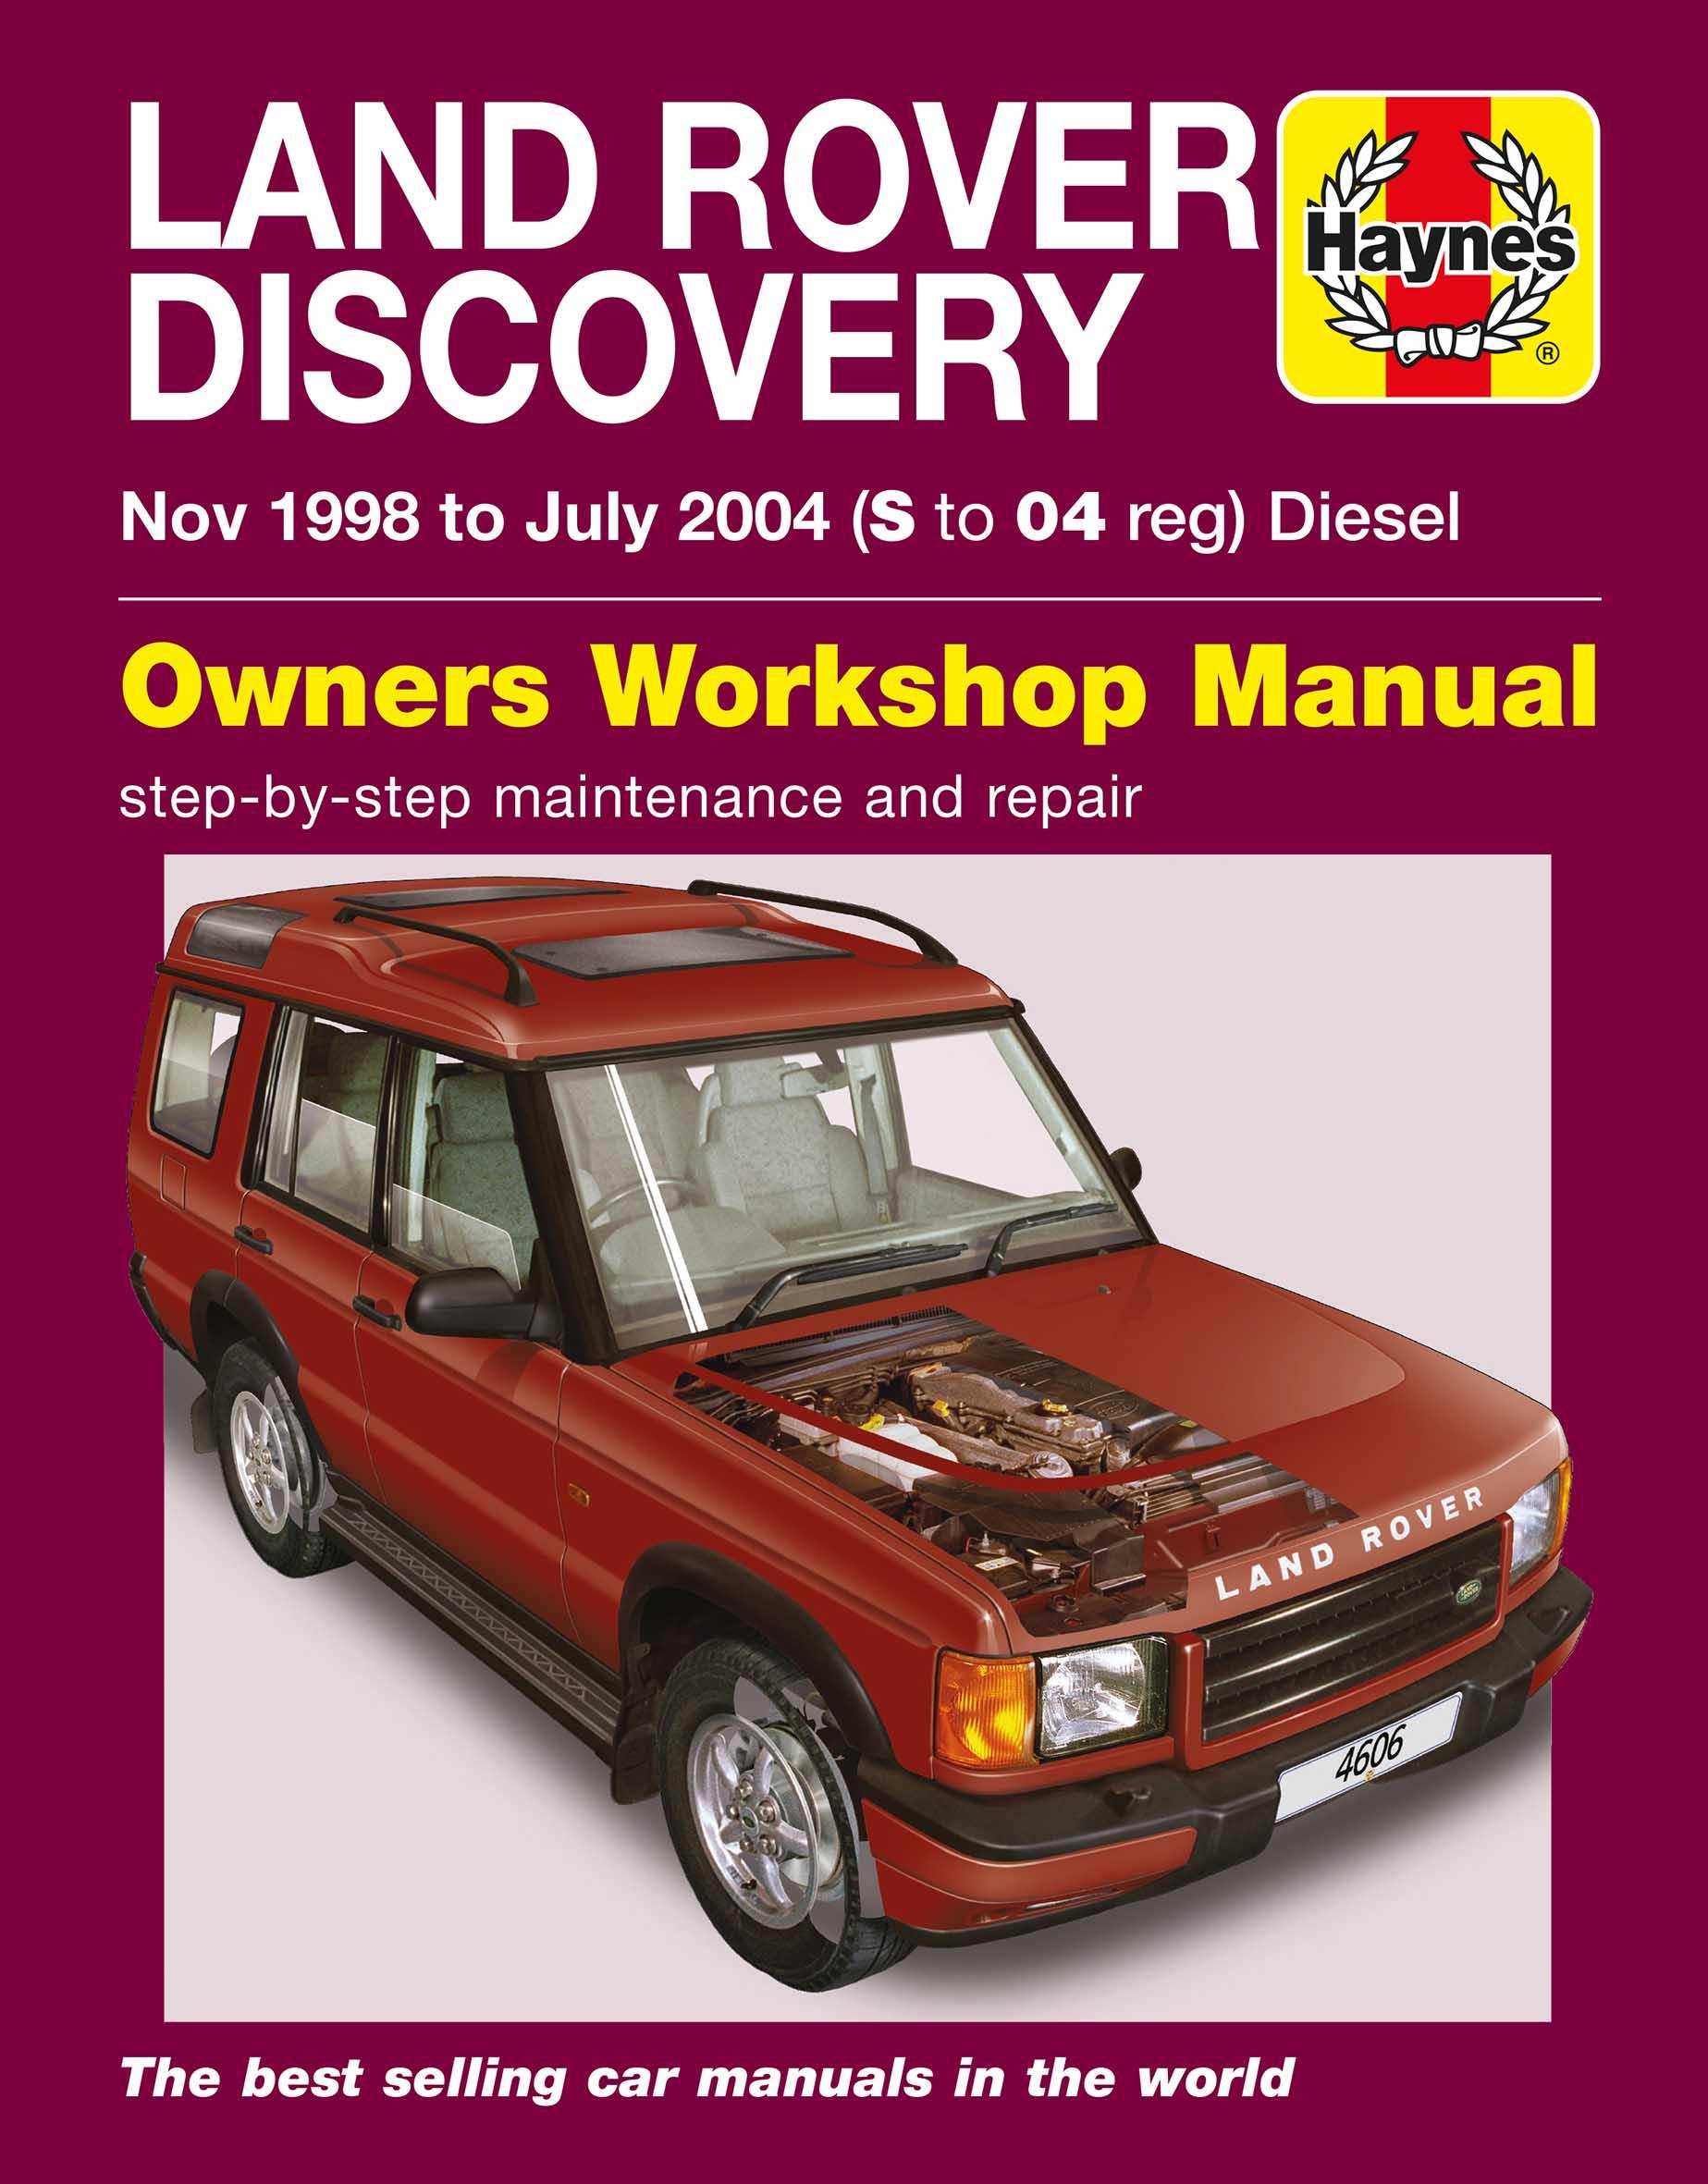 Haynes Land Rover Discovery (Nov 98 - Jul 04) Manual